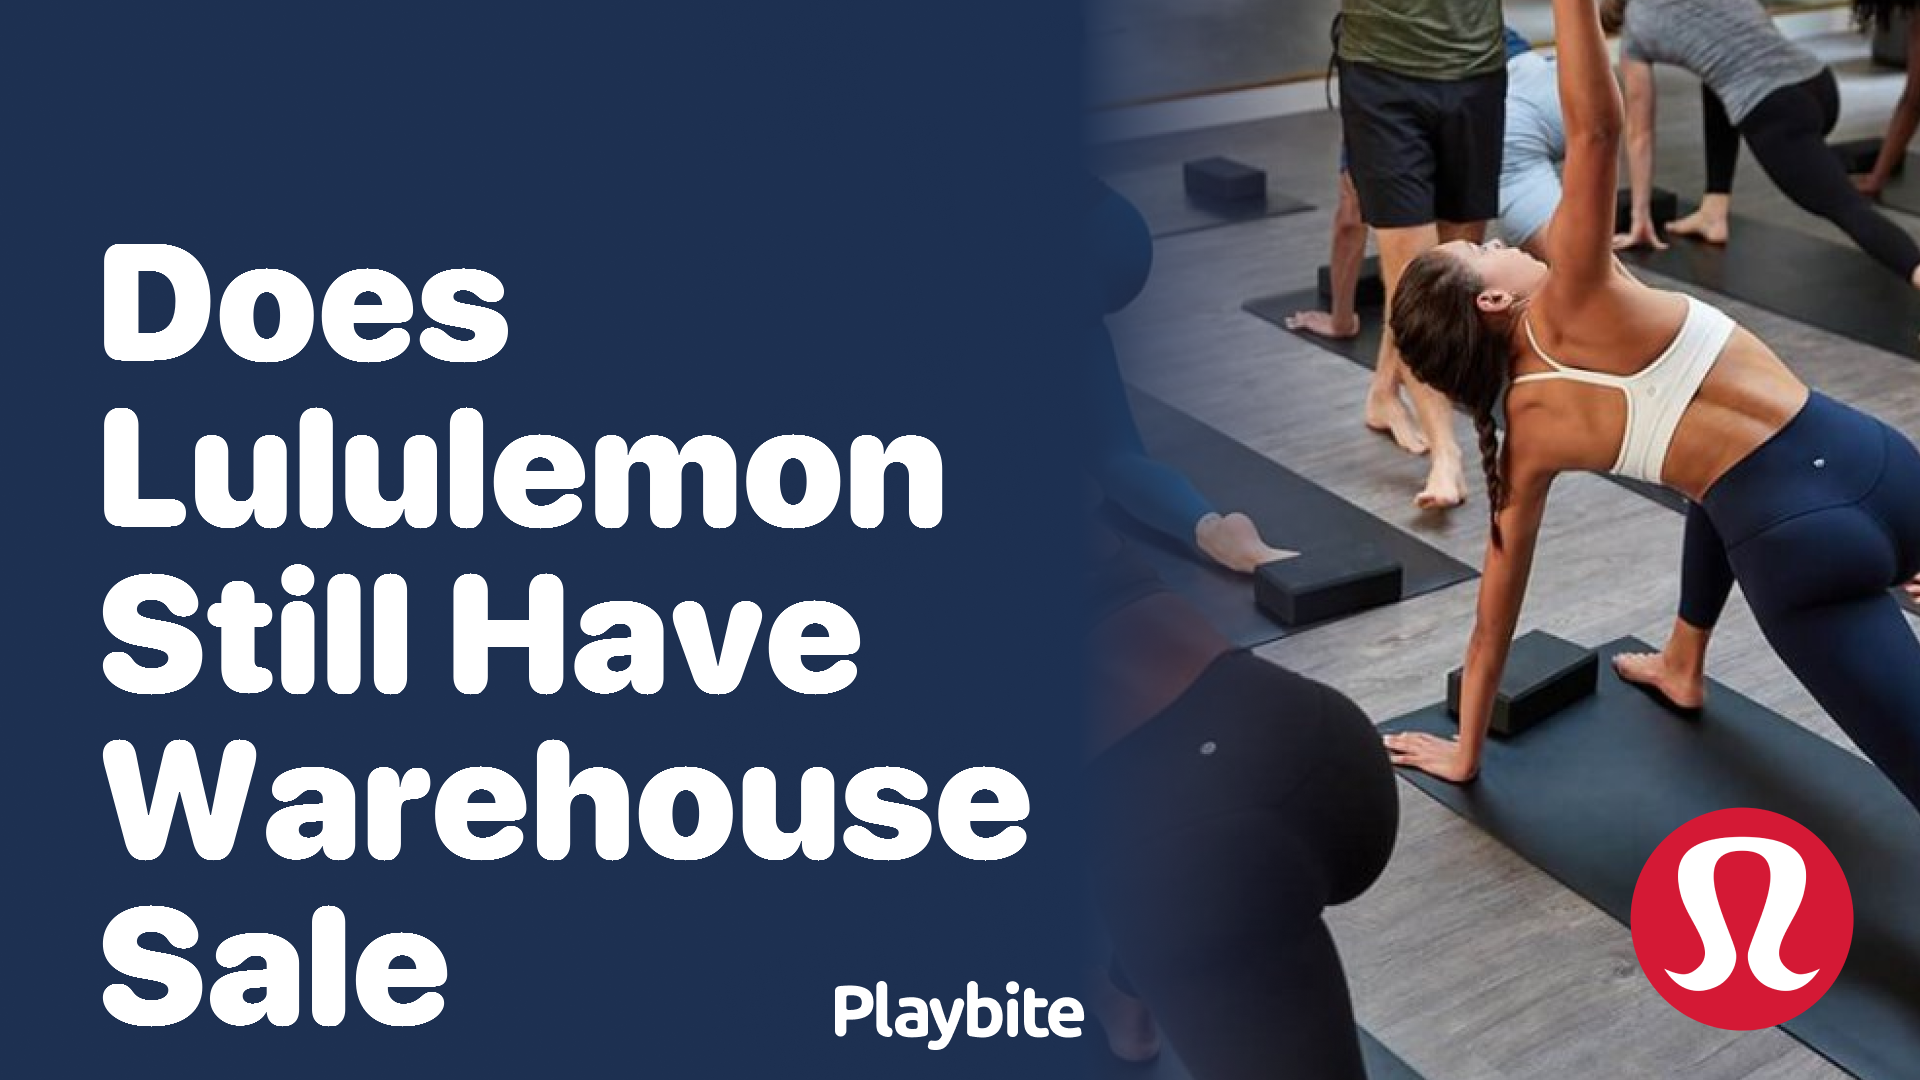 Does Lululemon Still Have Warehouse Sales? - Playbite